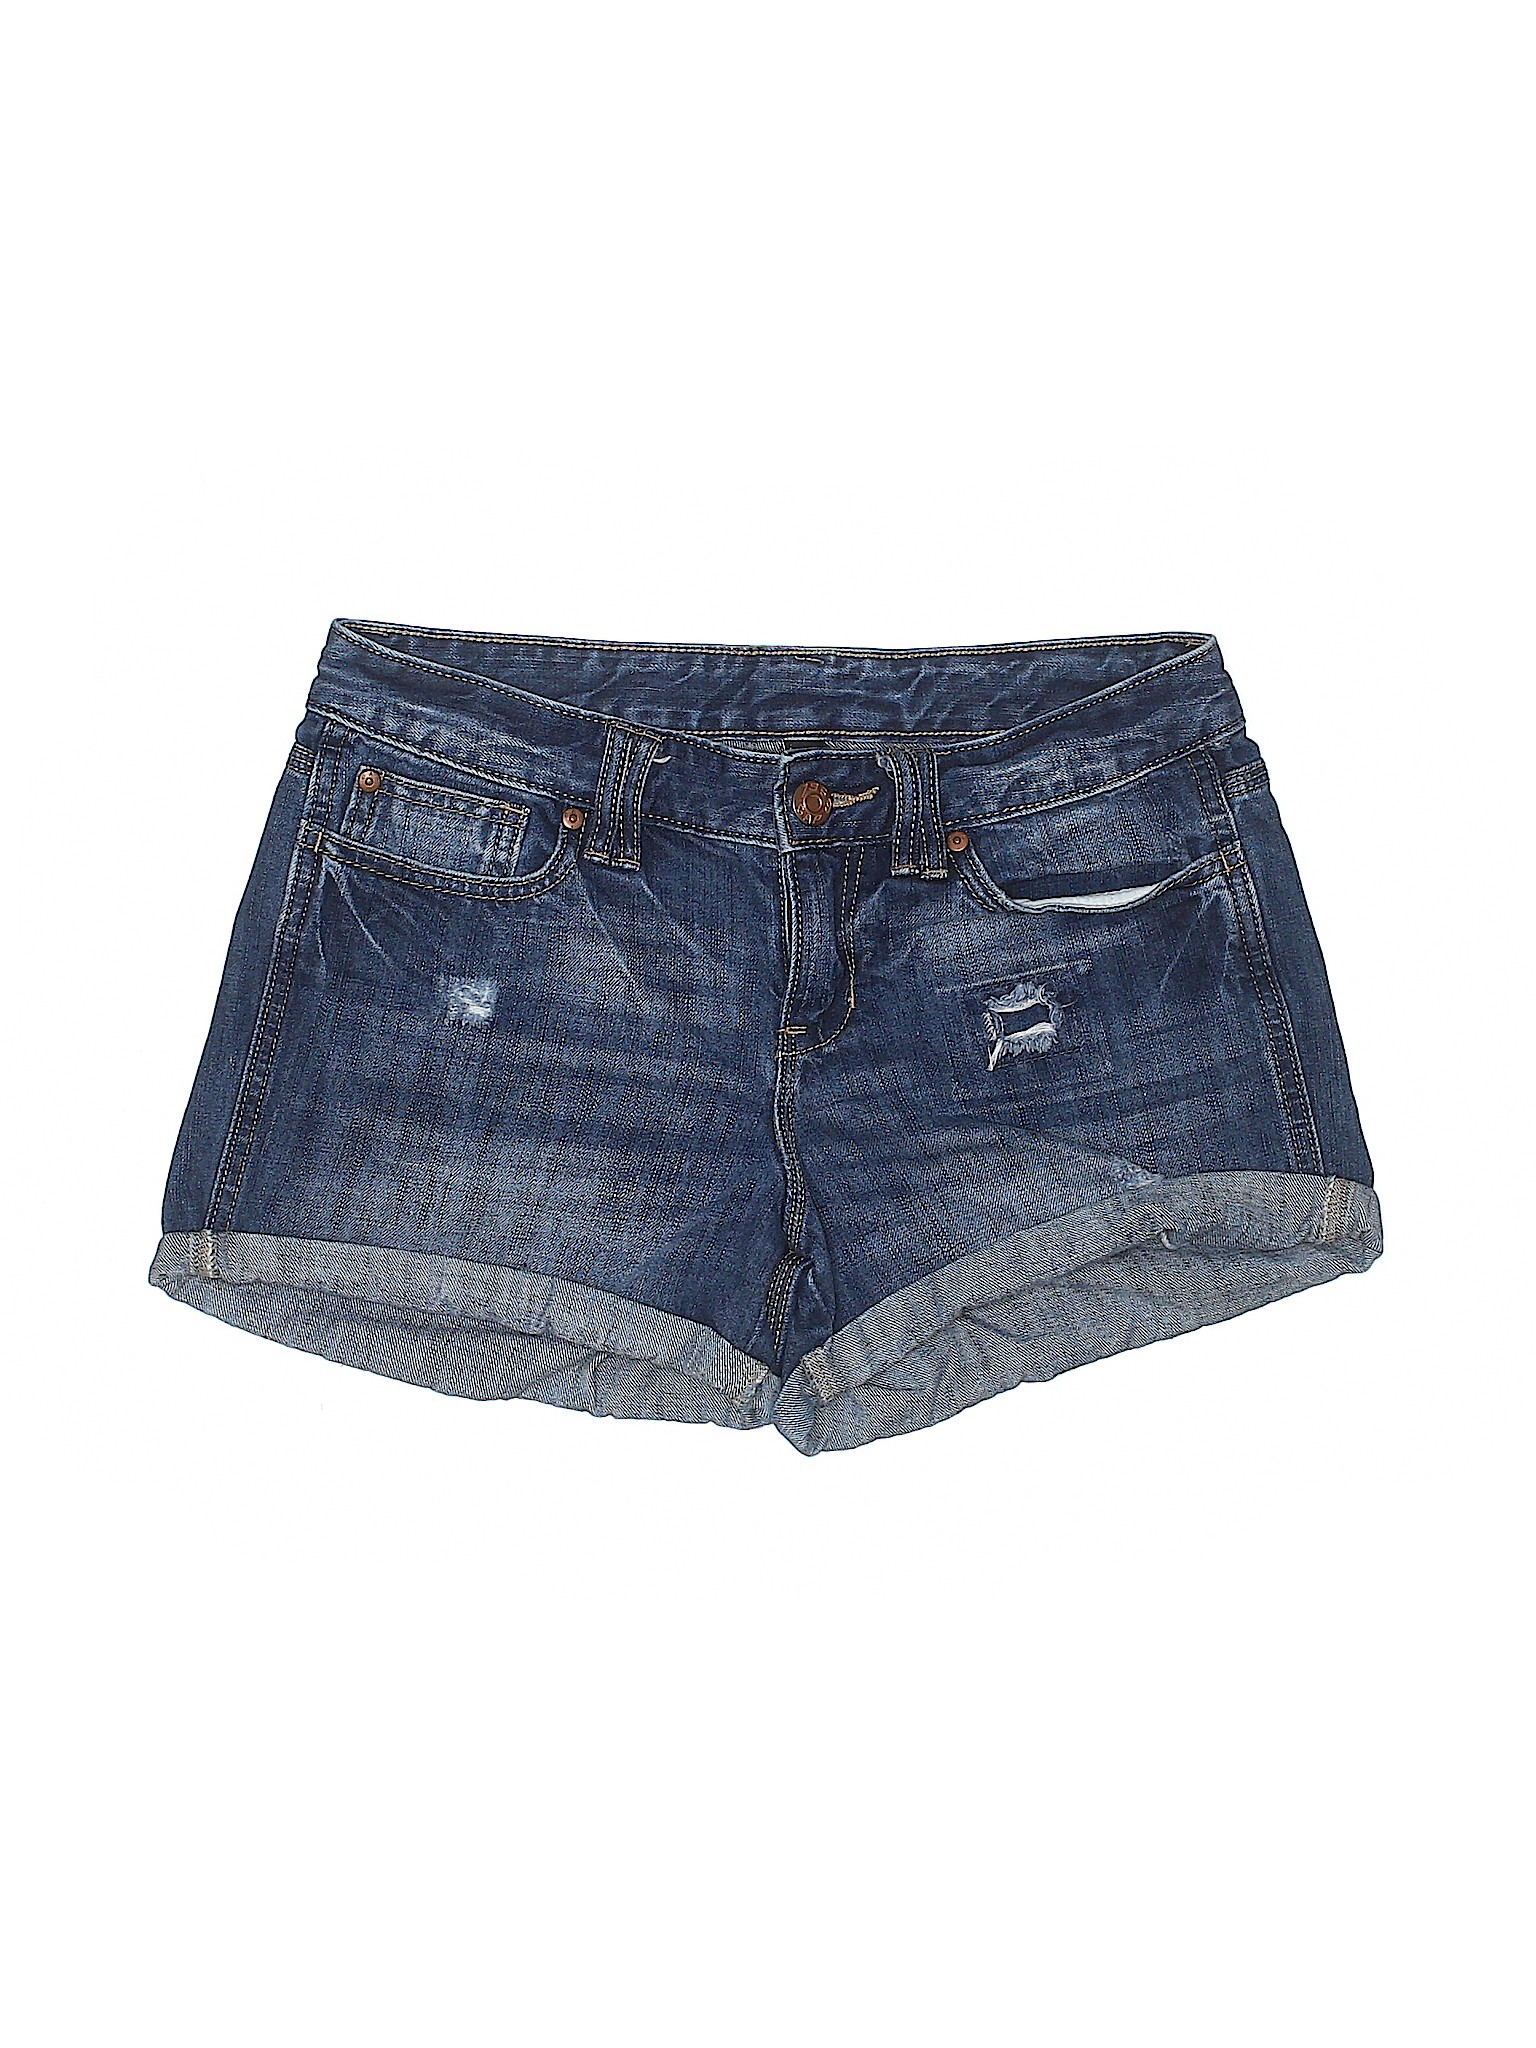 Gap Solid Blue Denim Shorts Size 4 - 80% off | thredUP